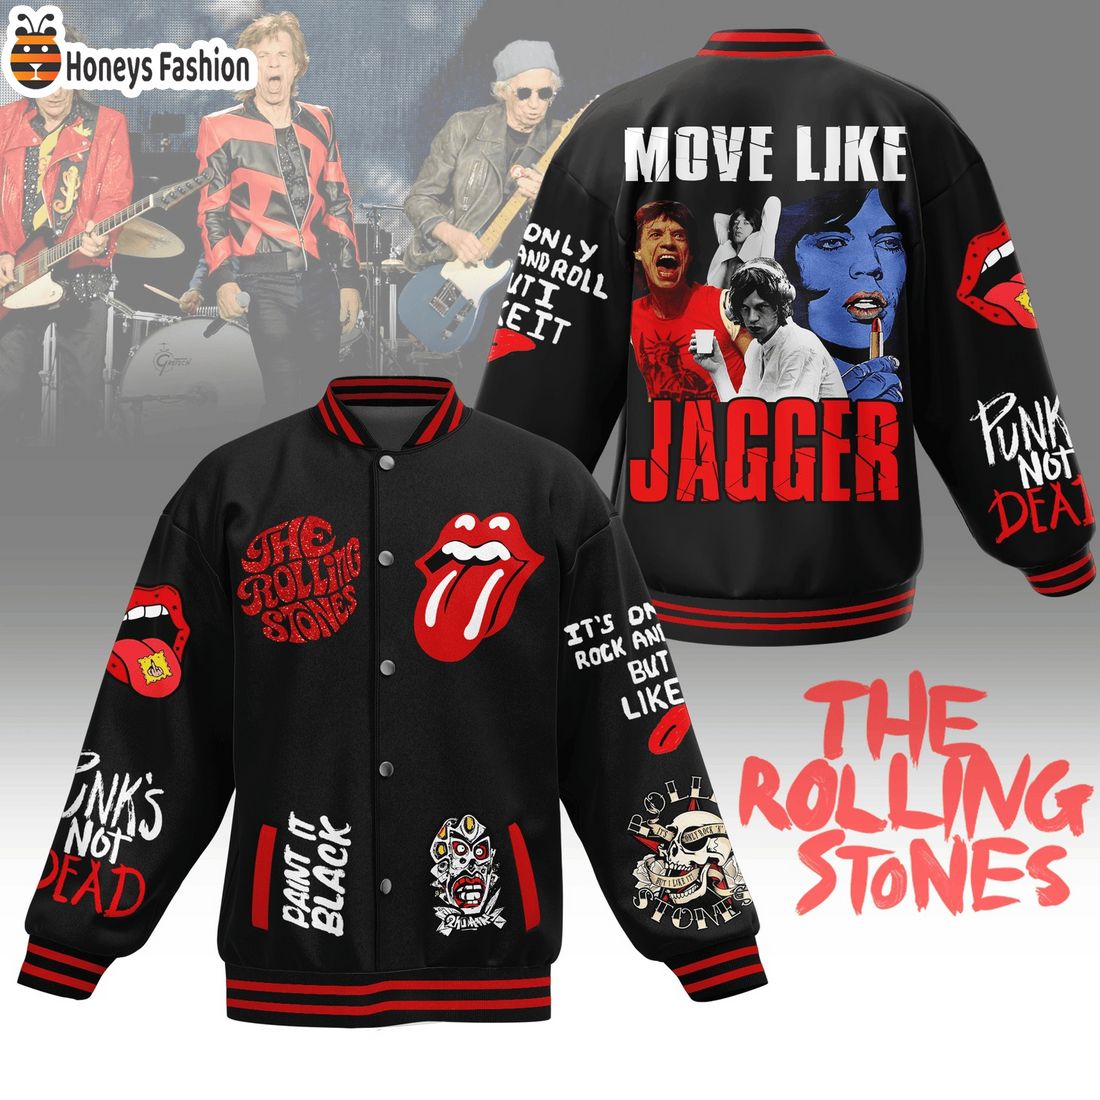 The Rolling Stones paint it black baseball jacket